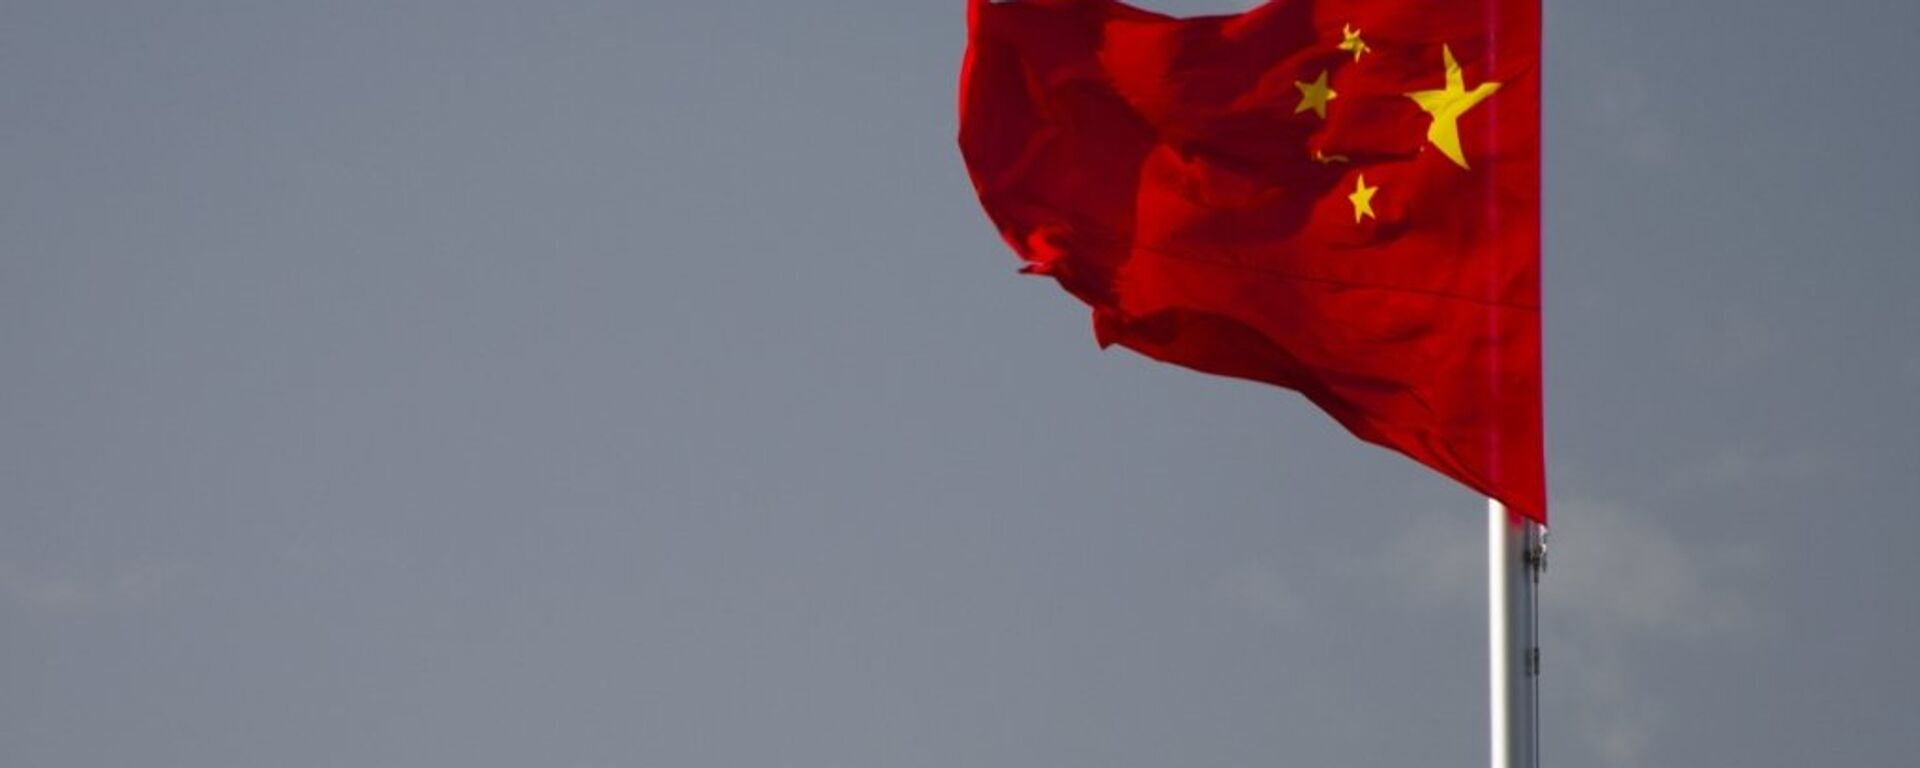 La bandera de China - Sputnik Mundo, 1920, 11.12.2019